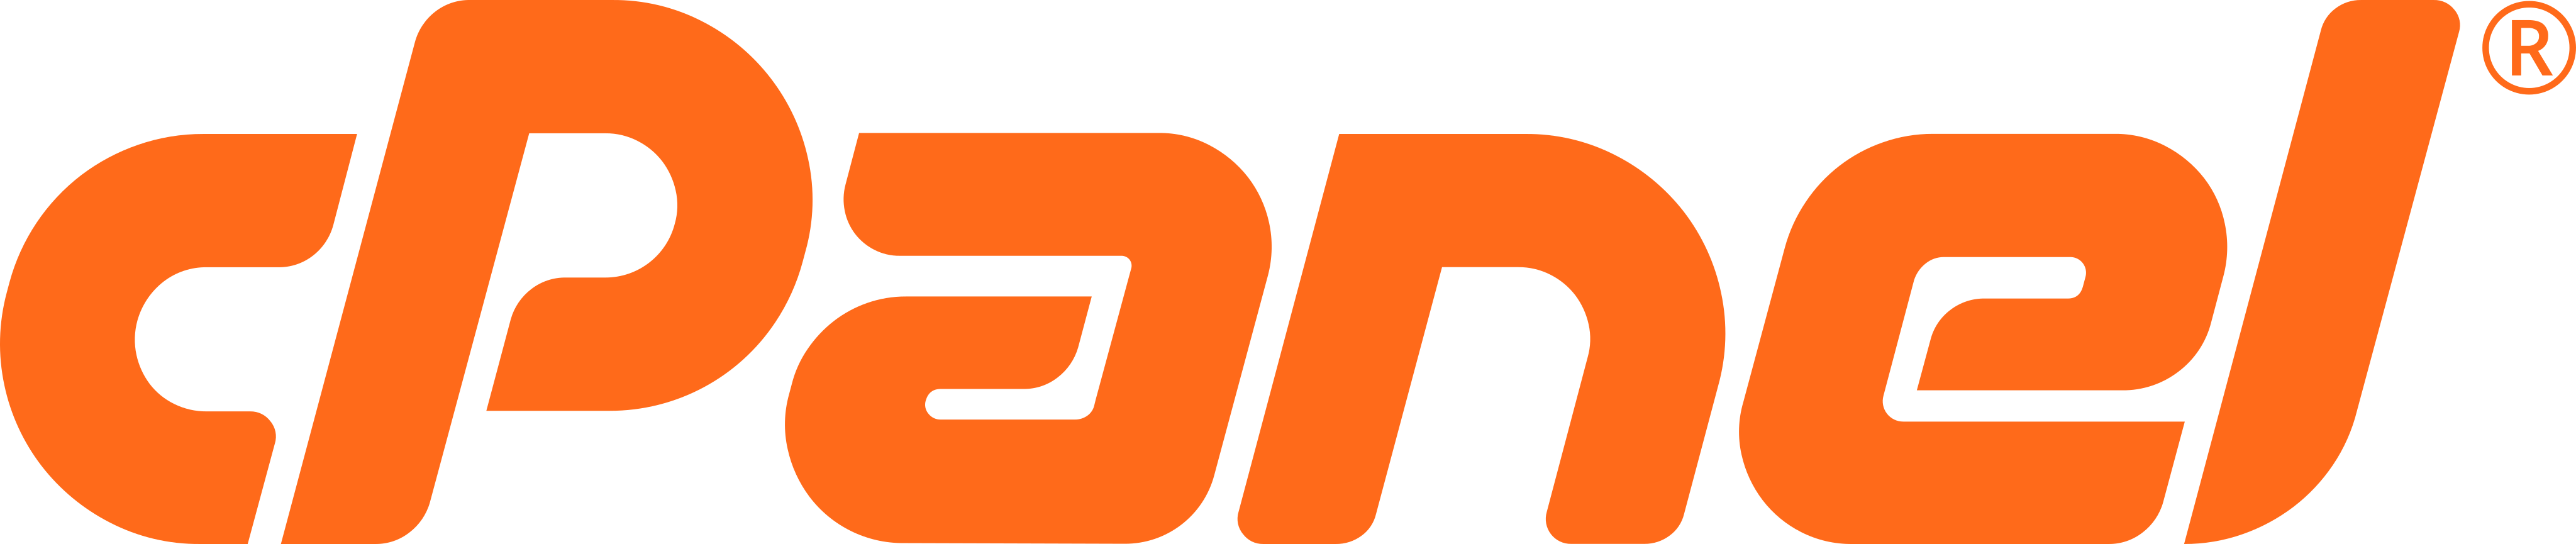 cpanel logo - cPanel Logo